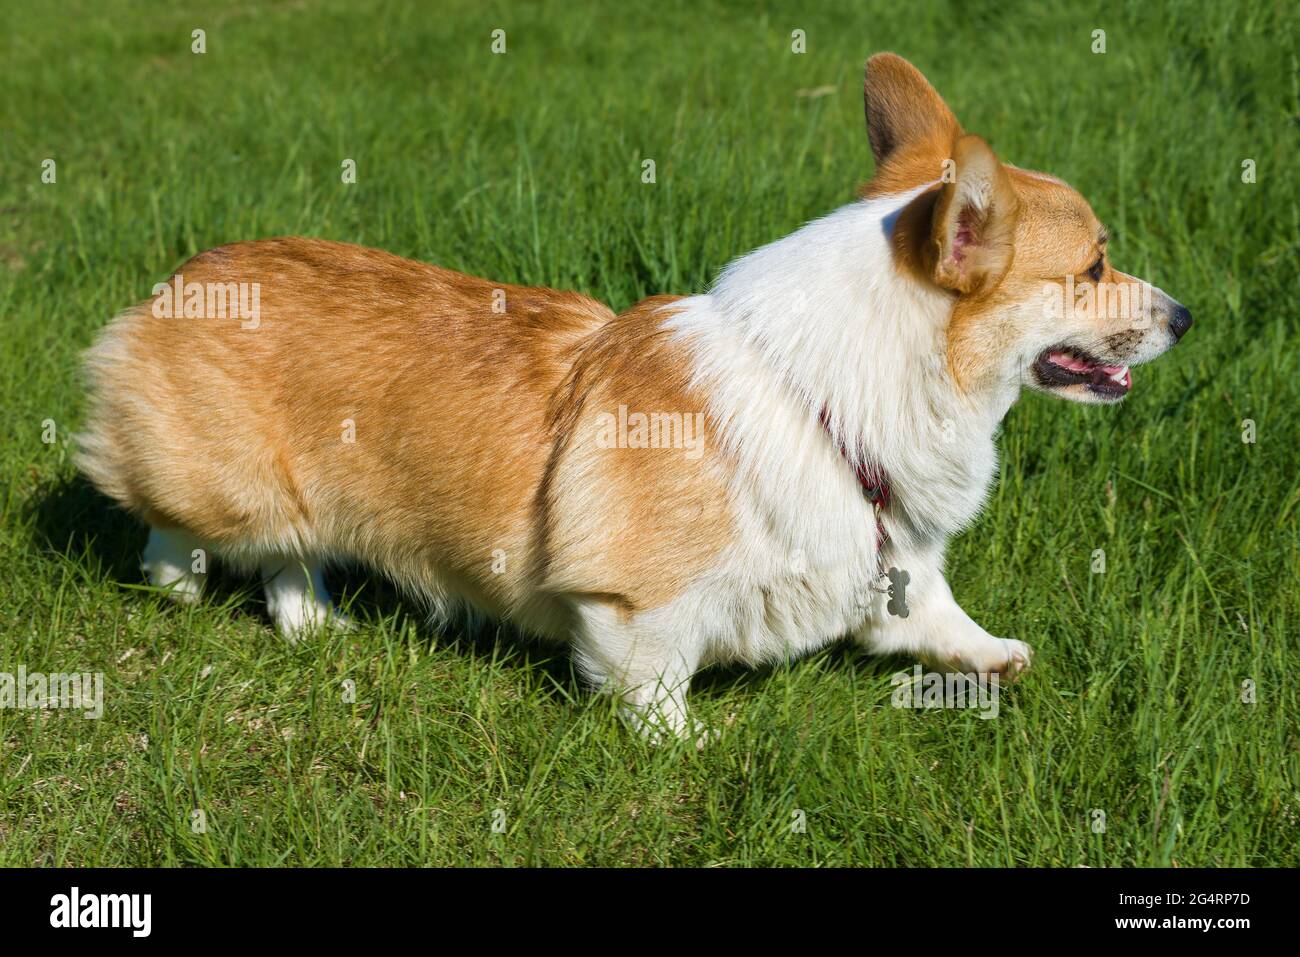 Welsh Corgi dog on green grass Stock Photo